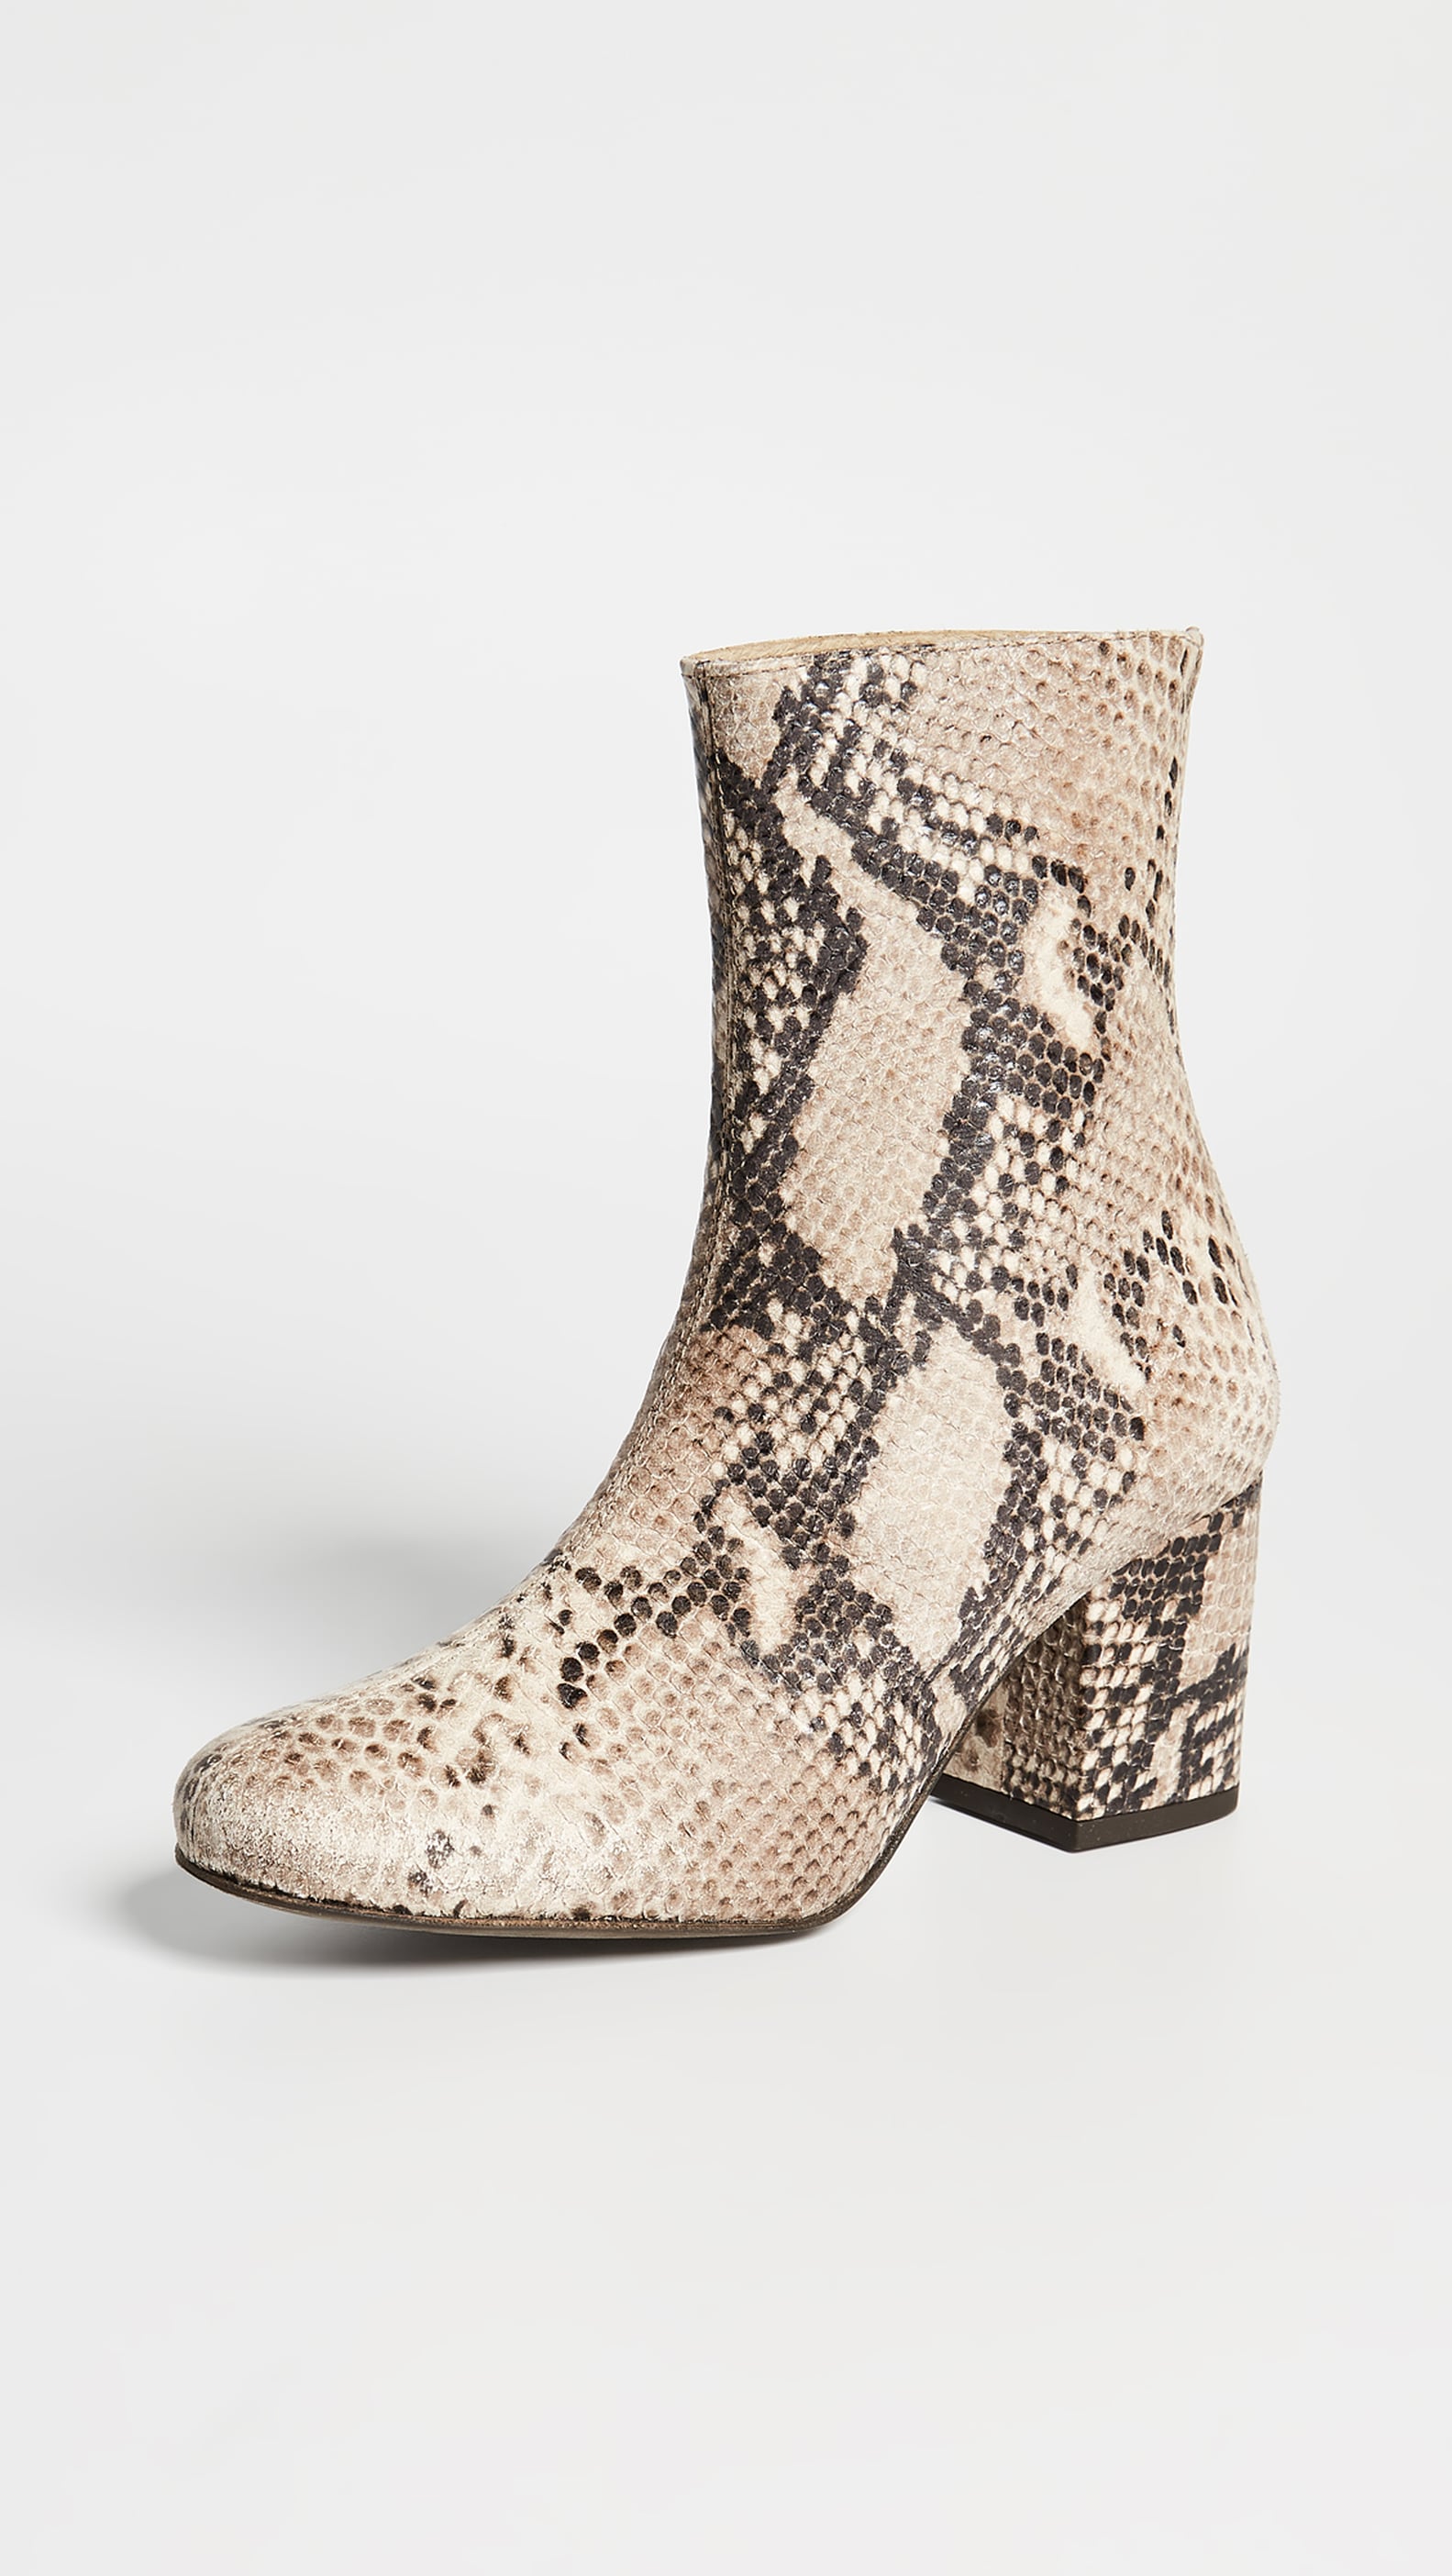 Emily Ratajkowski's Yeezy Snakeskin Boots | POPSUGAR Fashion